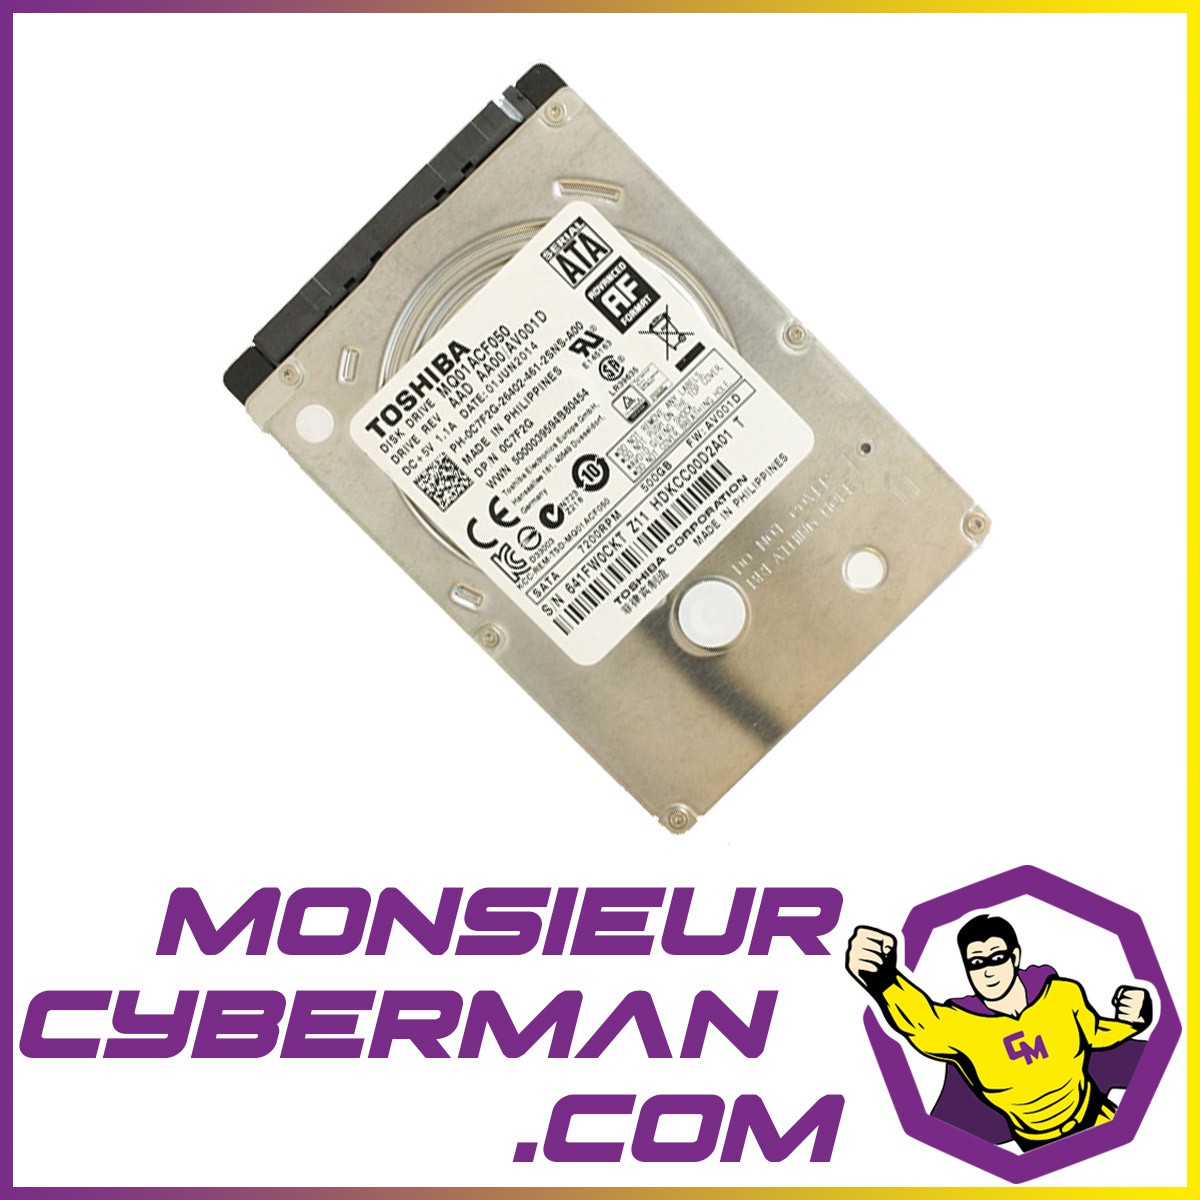 Disque Dur 640Go SATA 2.5 Toshiba MK6476GSX Pc Portable 8Mo -  MonsieurCyberMan